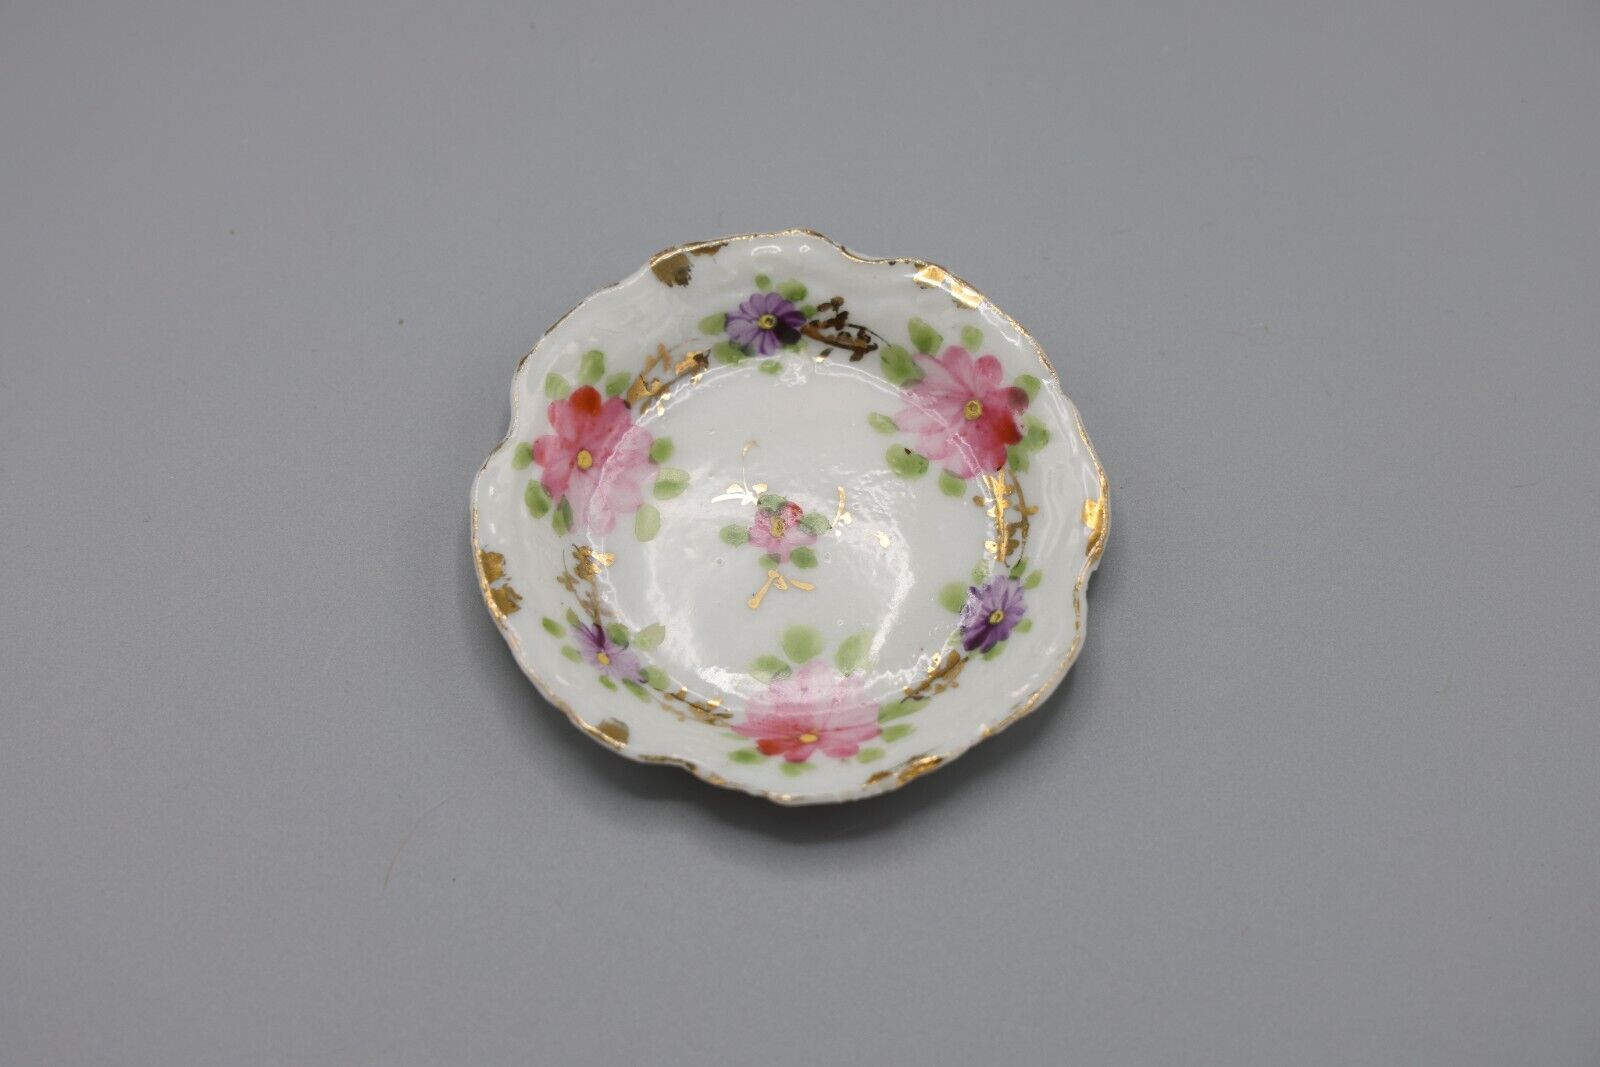 Vintage miniature hand painted japaense porcelain plate